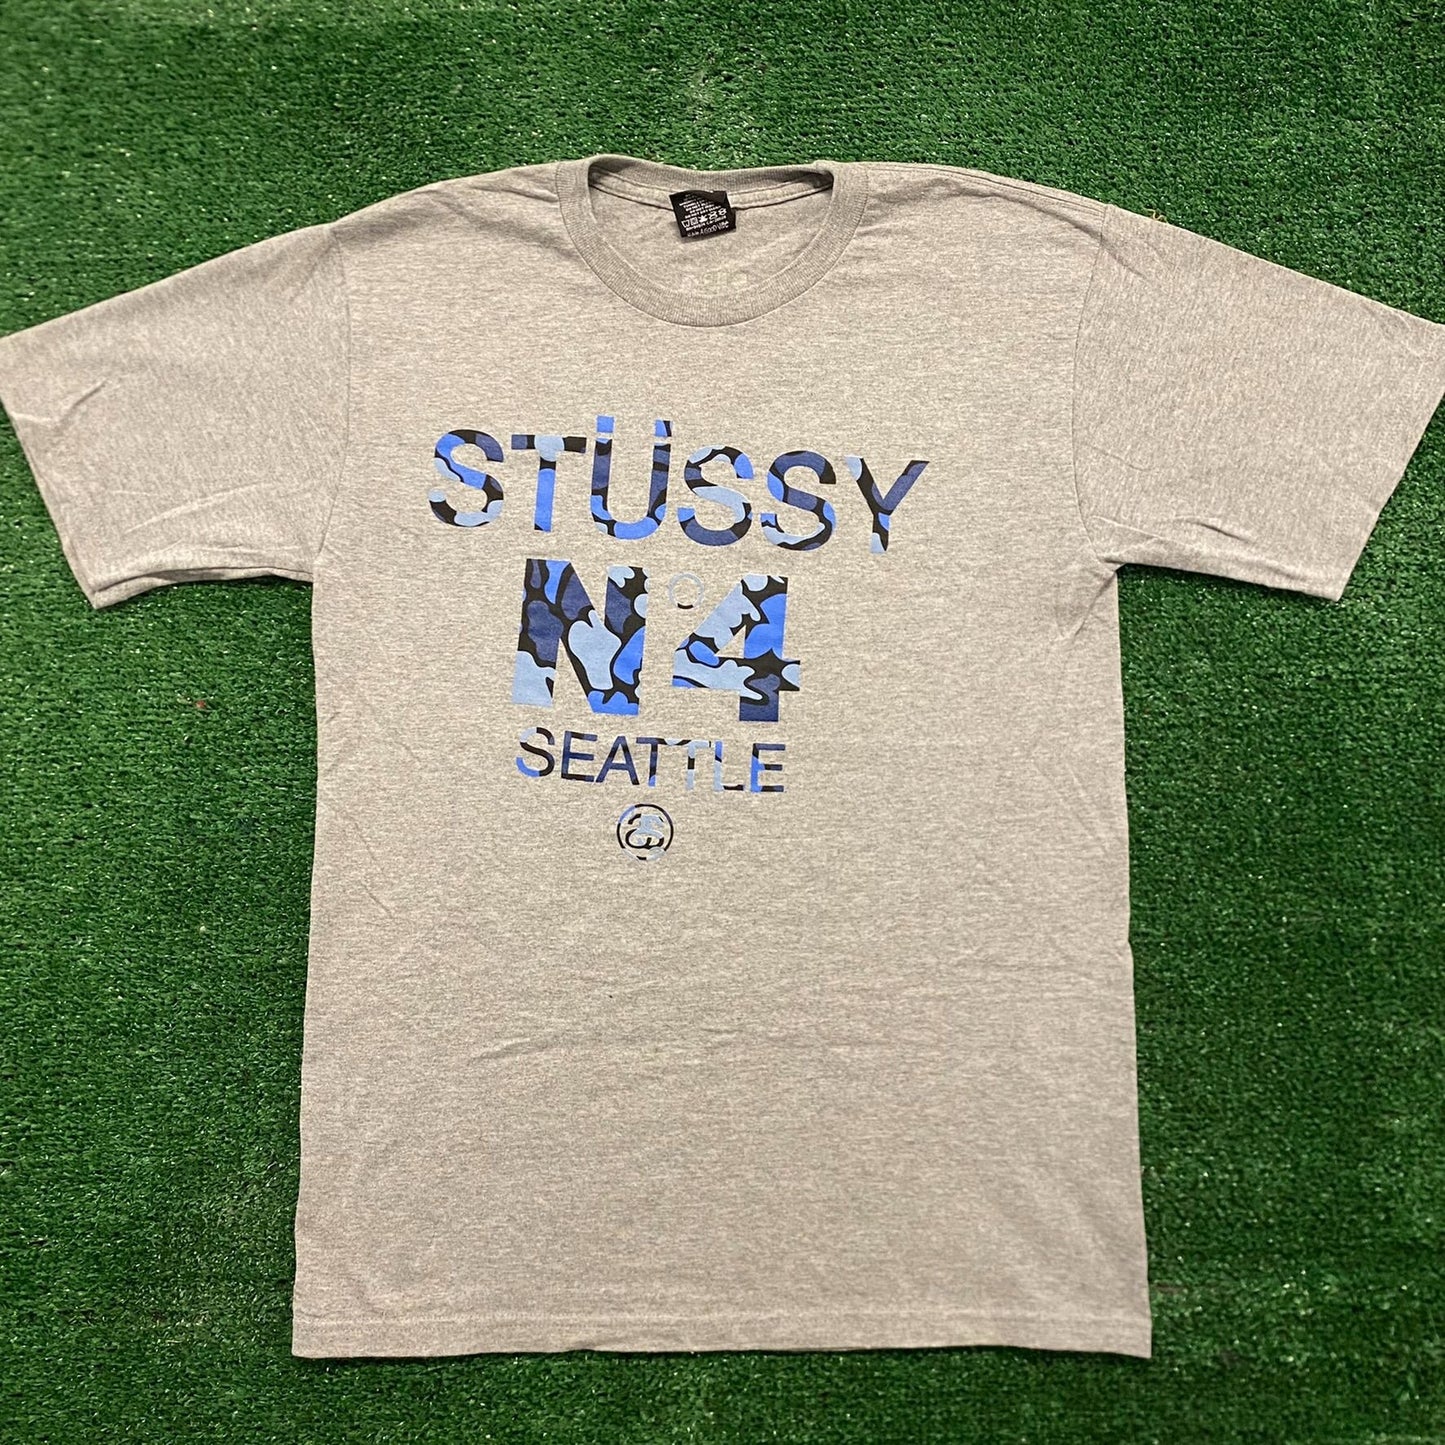 Vintage 2000s Stussy No. 4 Seattle Camo T-Shirt